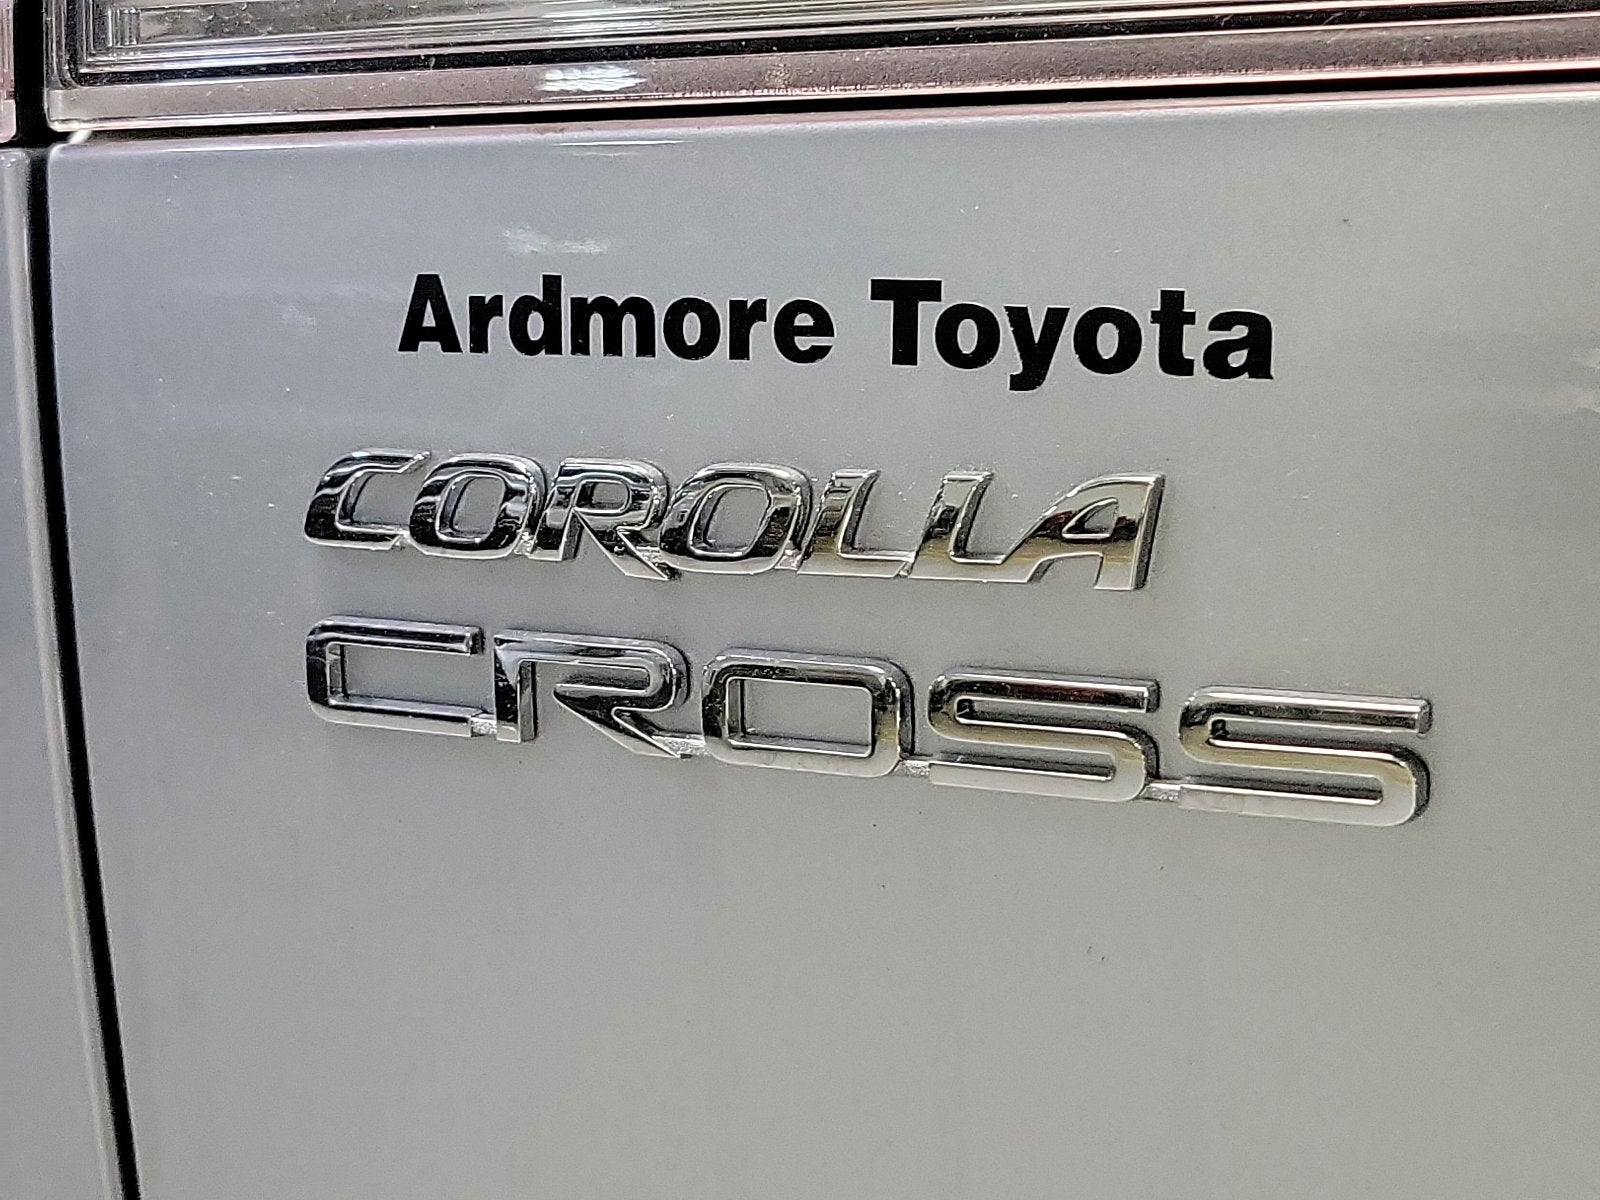 2023 Toyota Corolla Cross LE